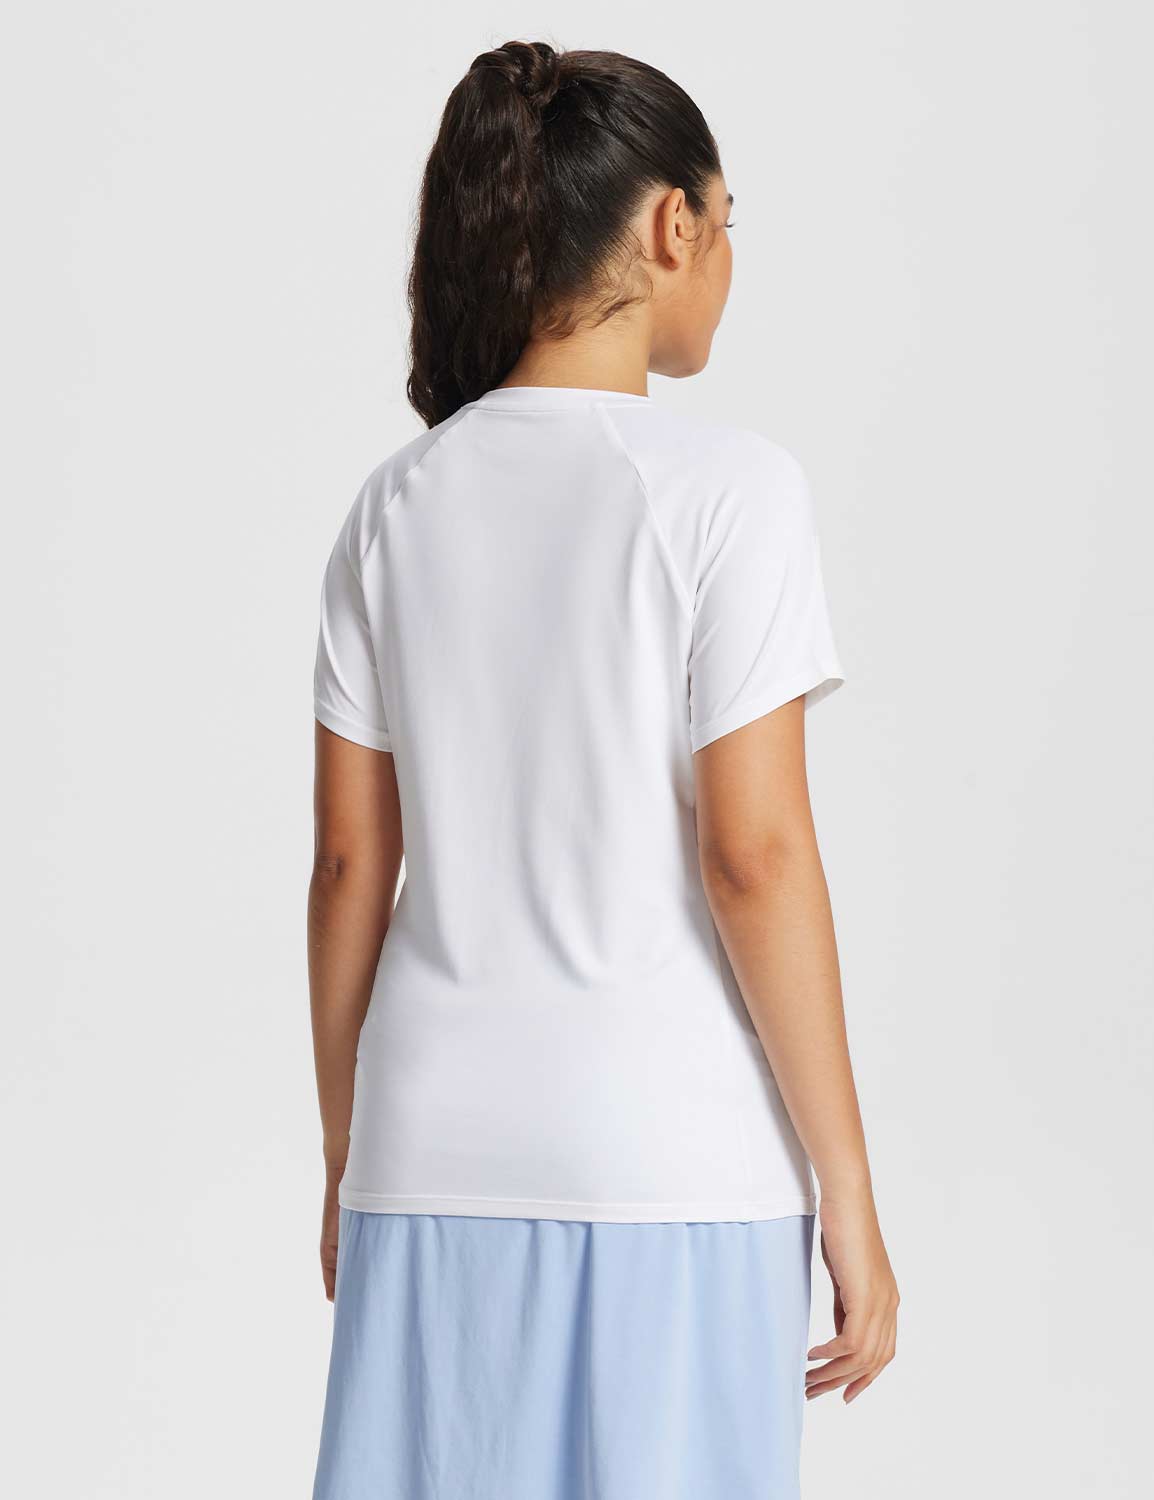 Baleaf Women's Summer Short Sleeve V Neck T-shirts Lucent White Back